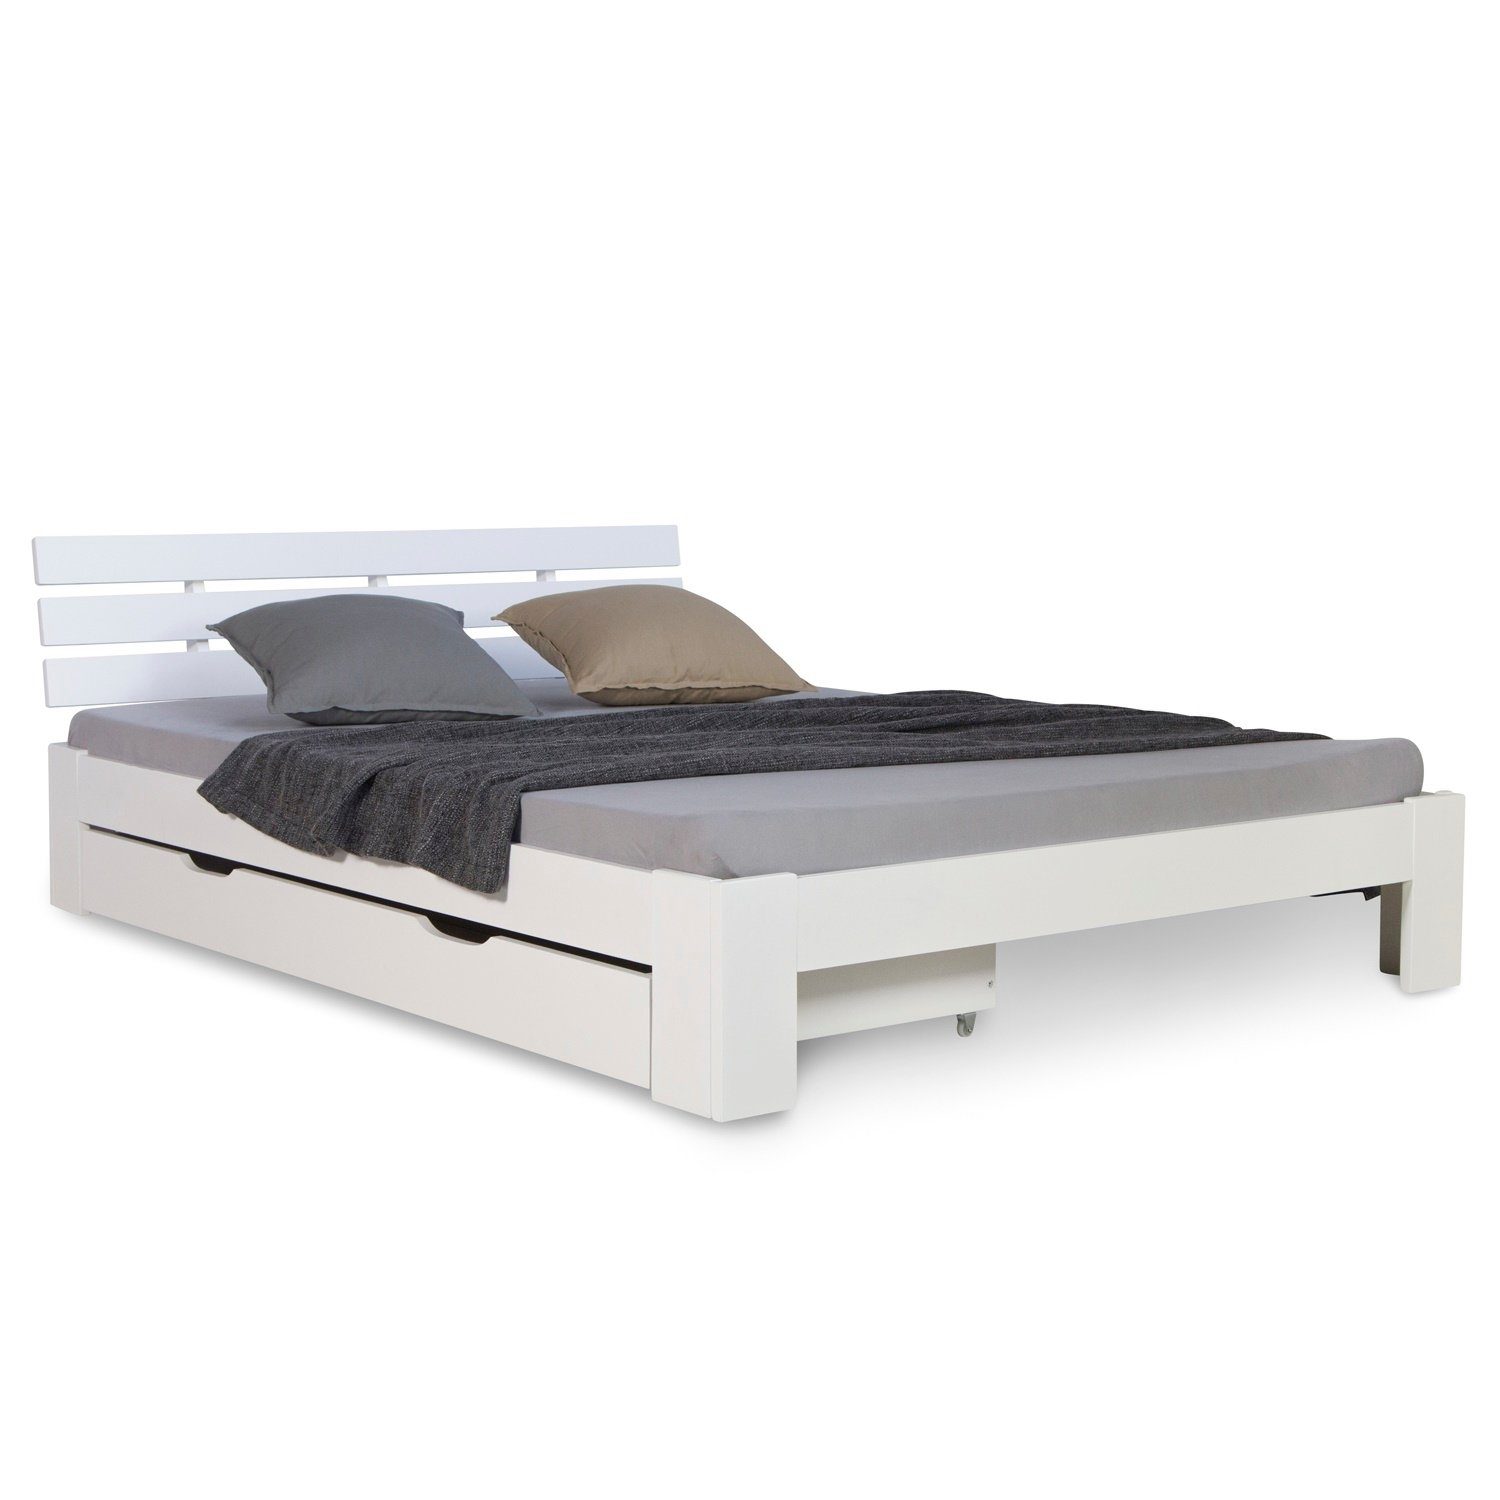 Doppelbett Bettkasten Weiß cm 140x200 Homestyle4u Lattenrost Holzbett